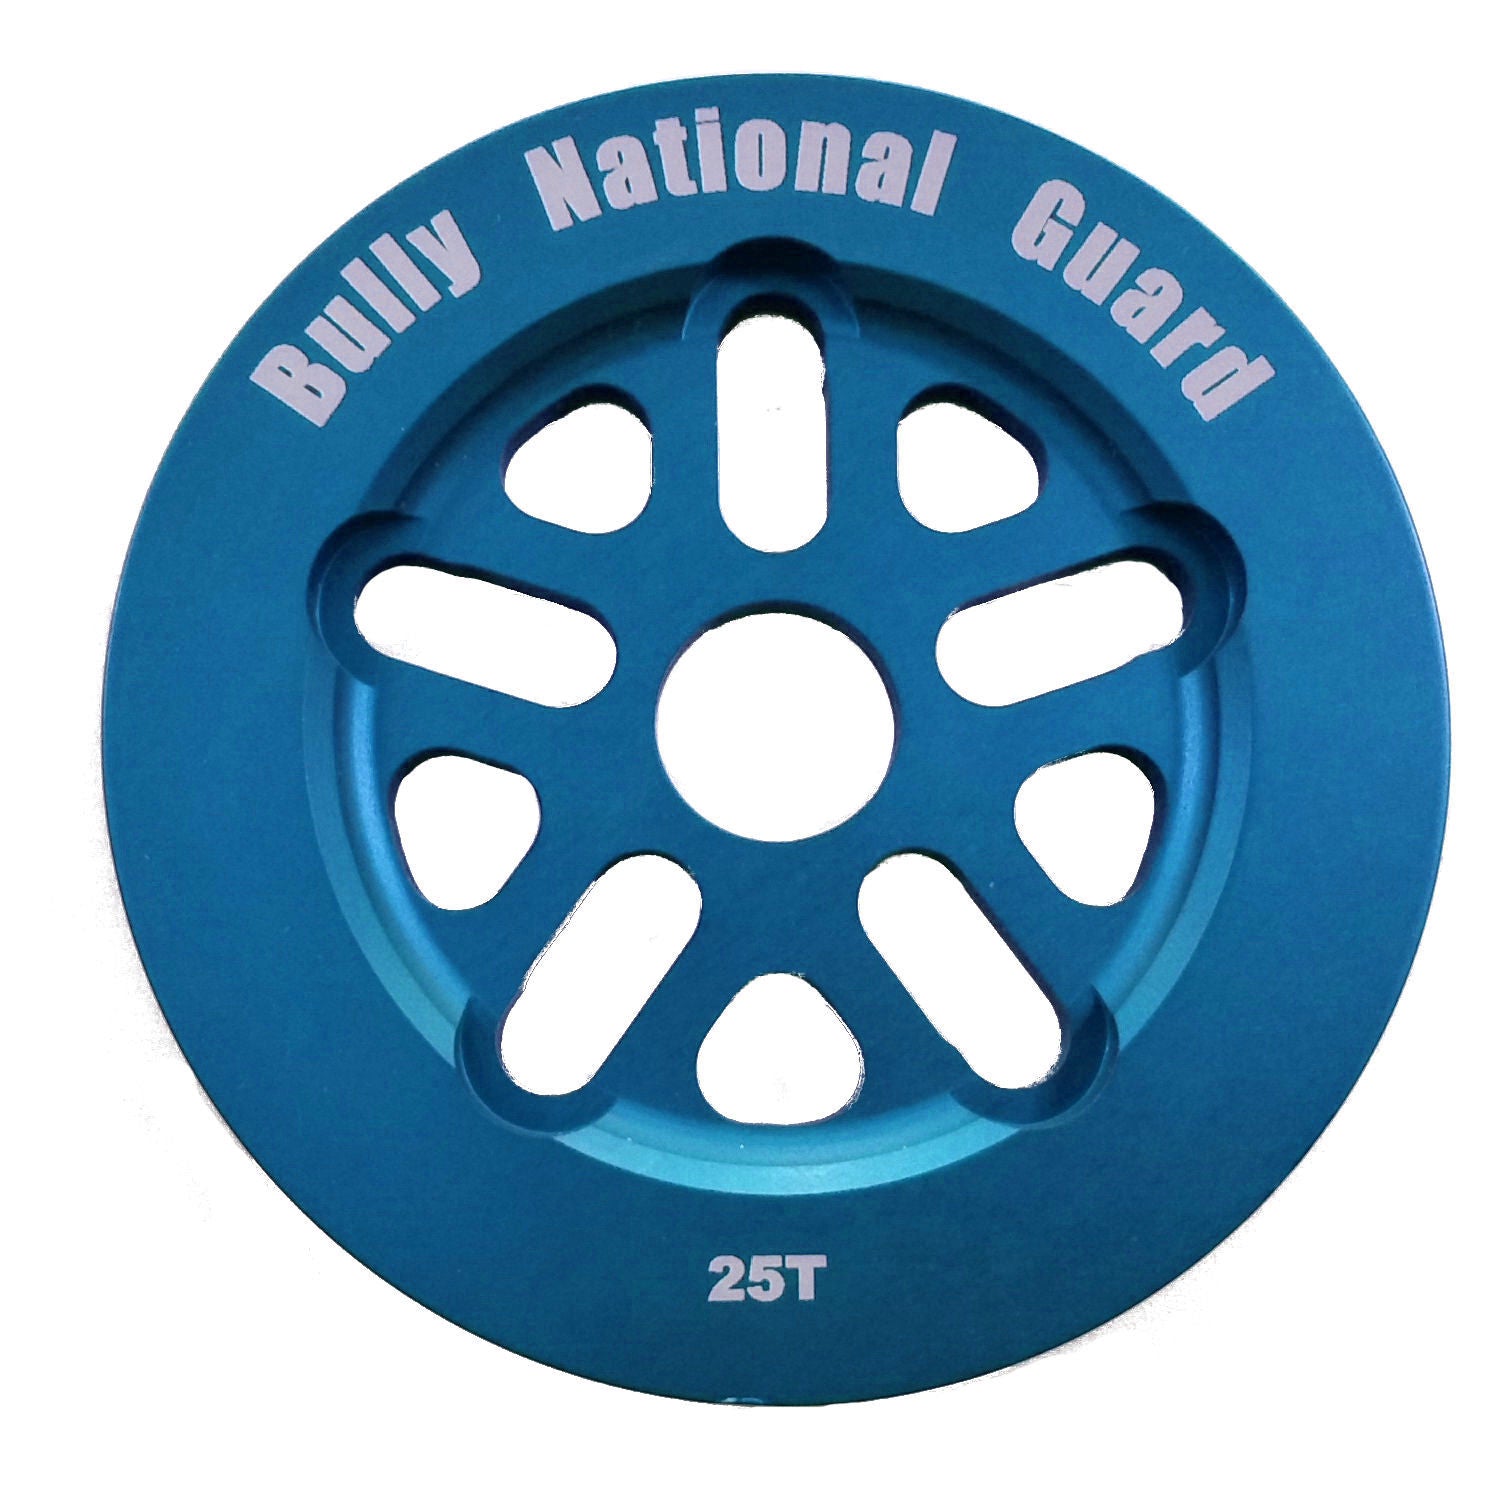 Bully National Guard 25t Sprocket Chainwheel - Blue - USA Made